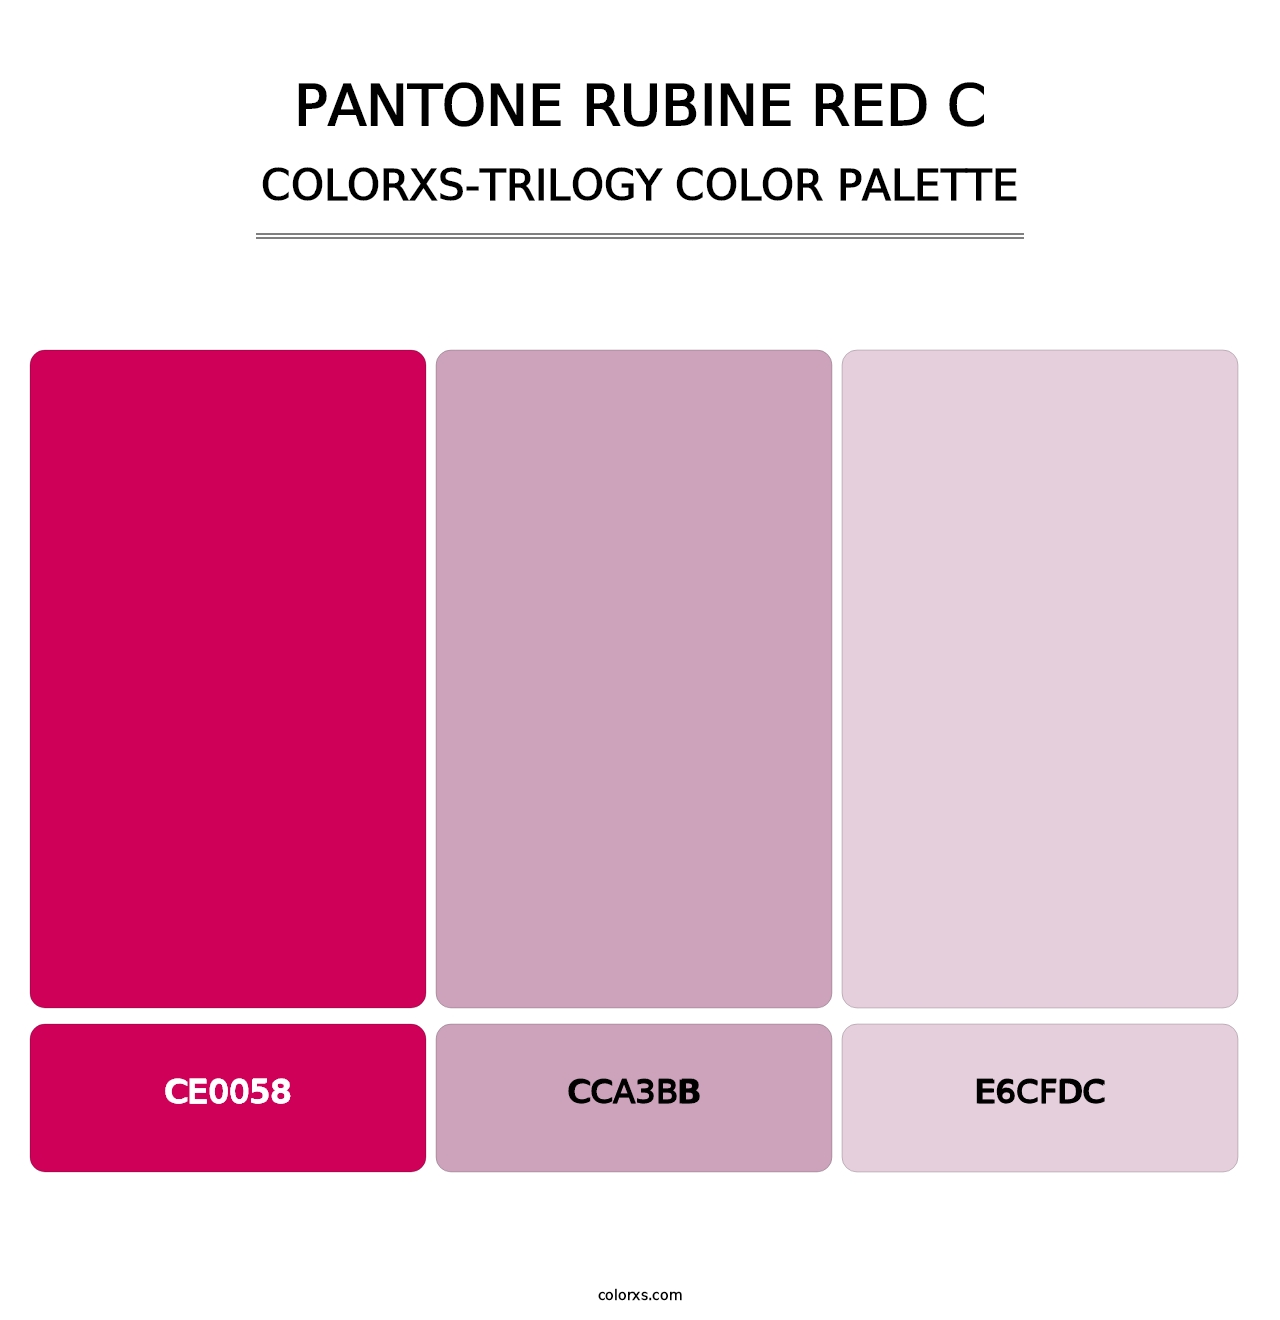 PANTONE Rubine Red C - Colorxs Trilogy Palette